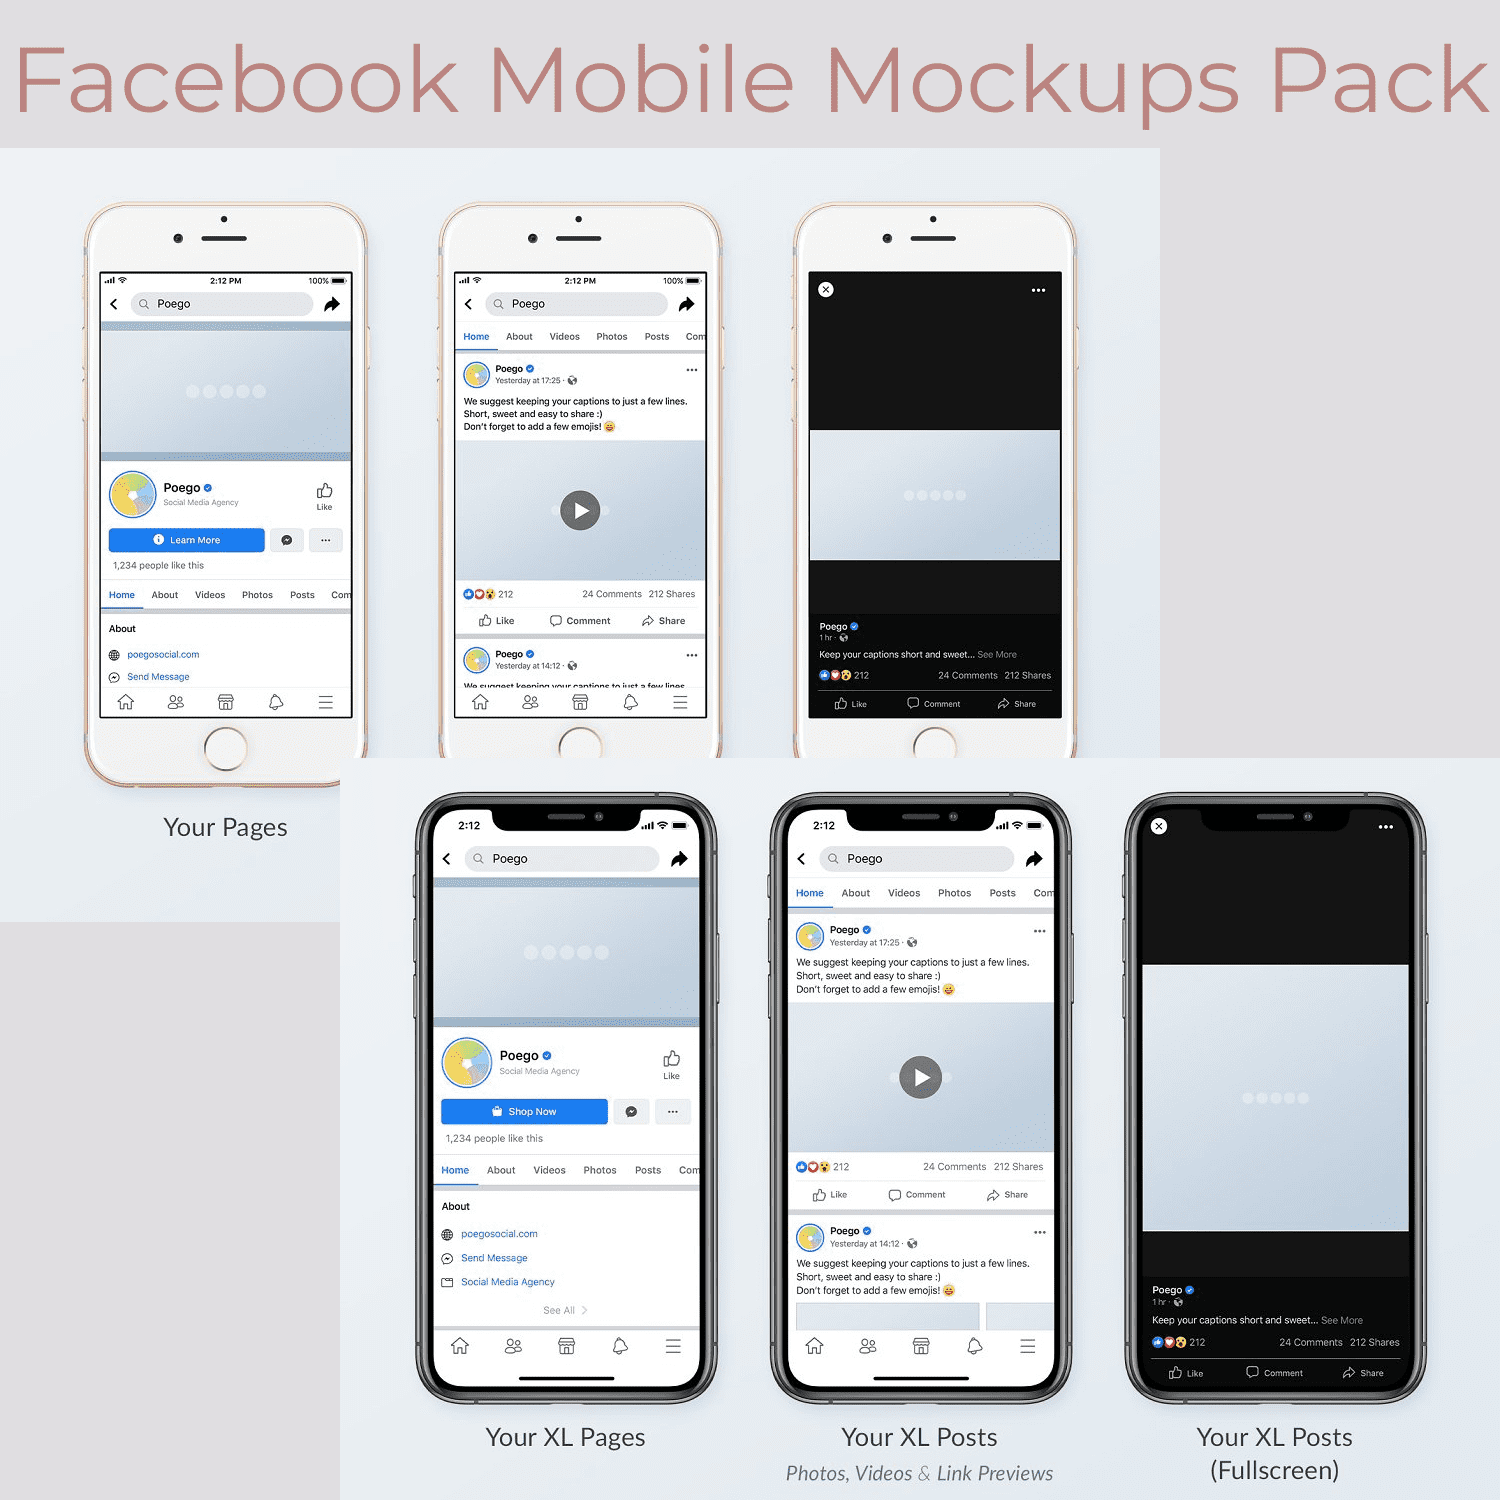 Facebook Mobile Mockups Pack main cover.